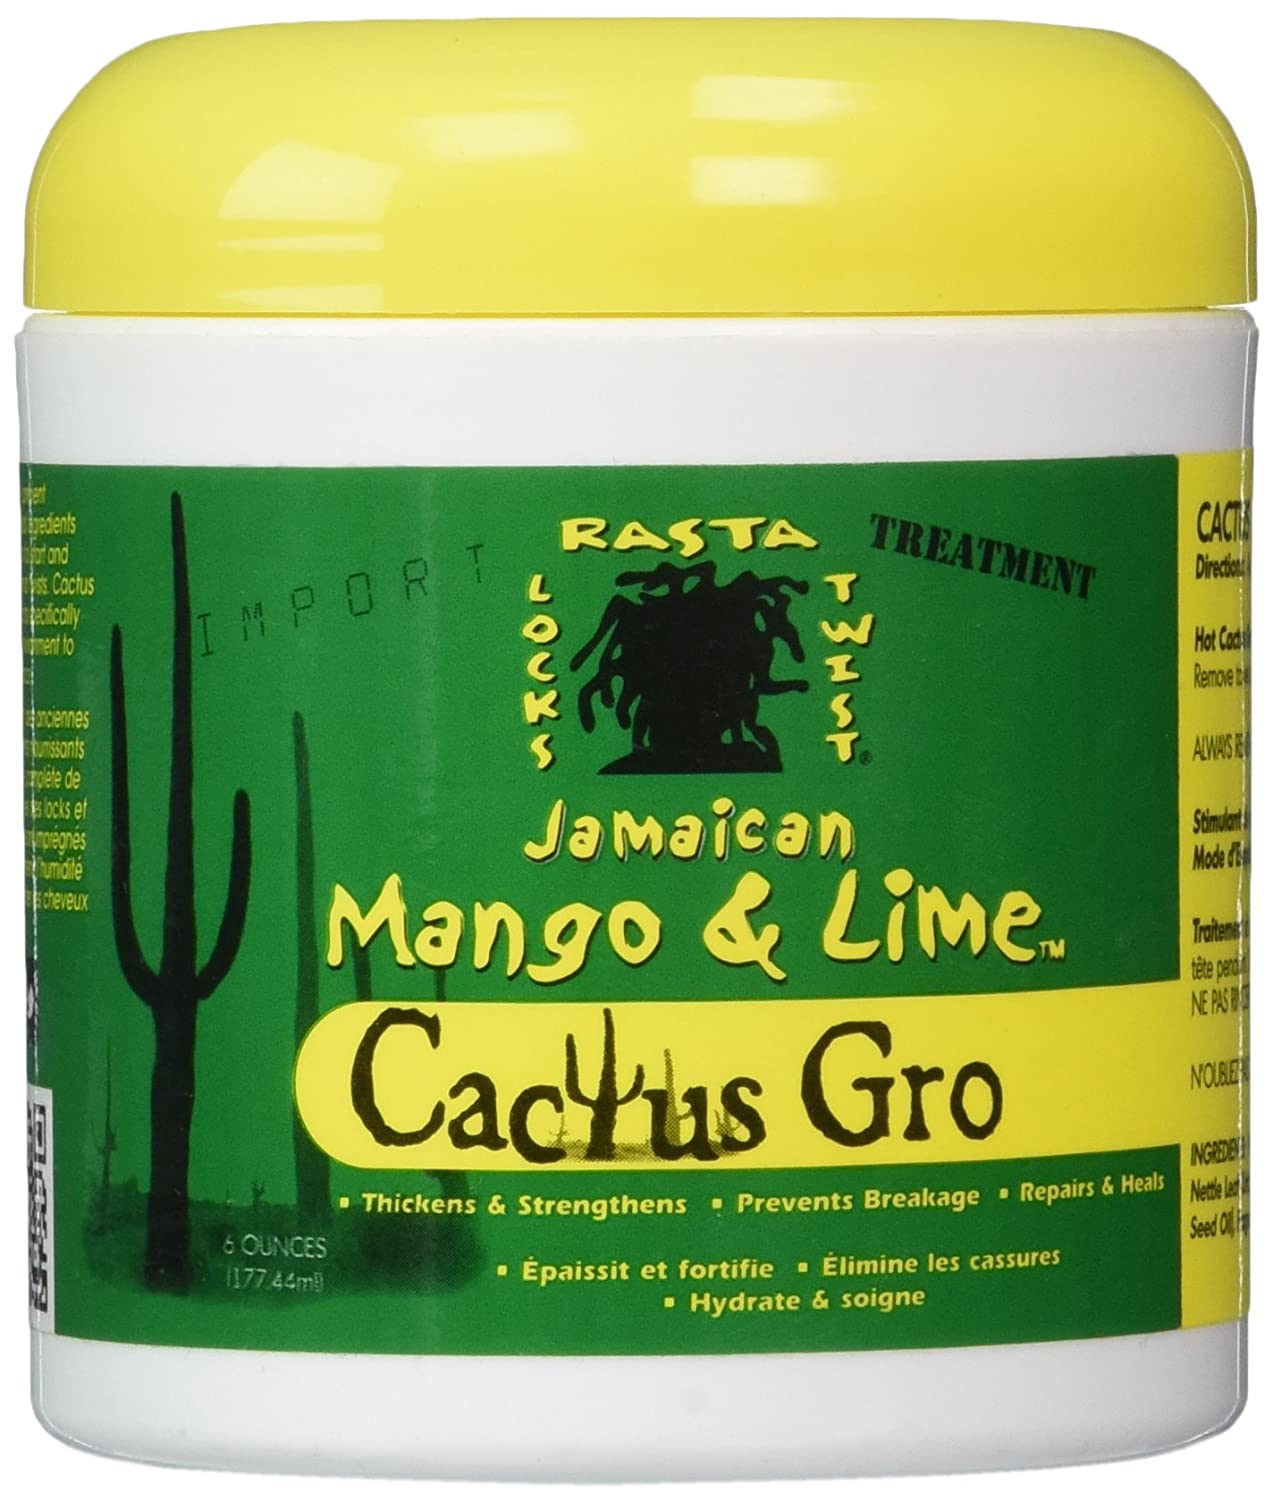 Jamaican Mango & Lime: Cactus Gro